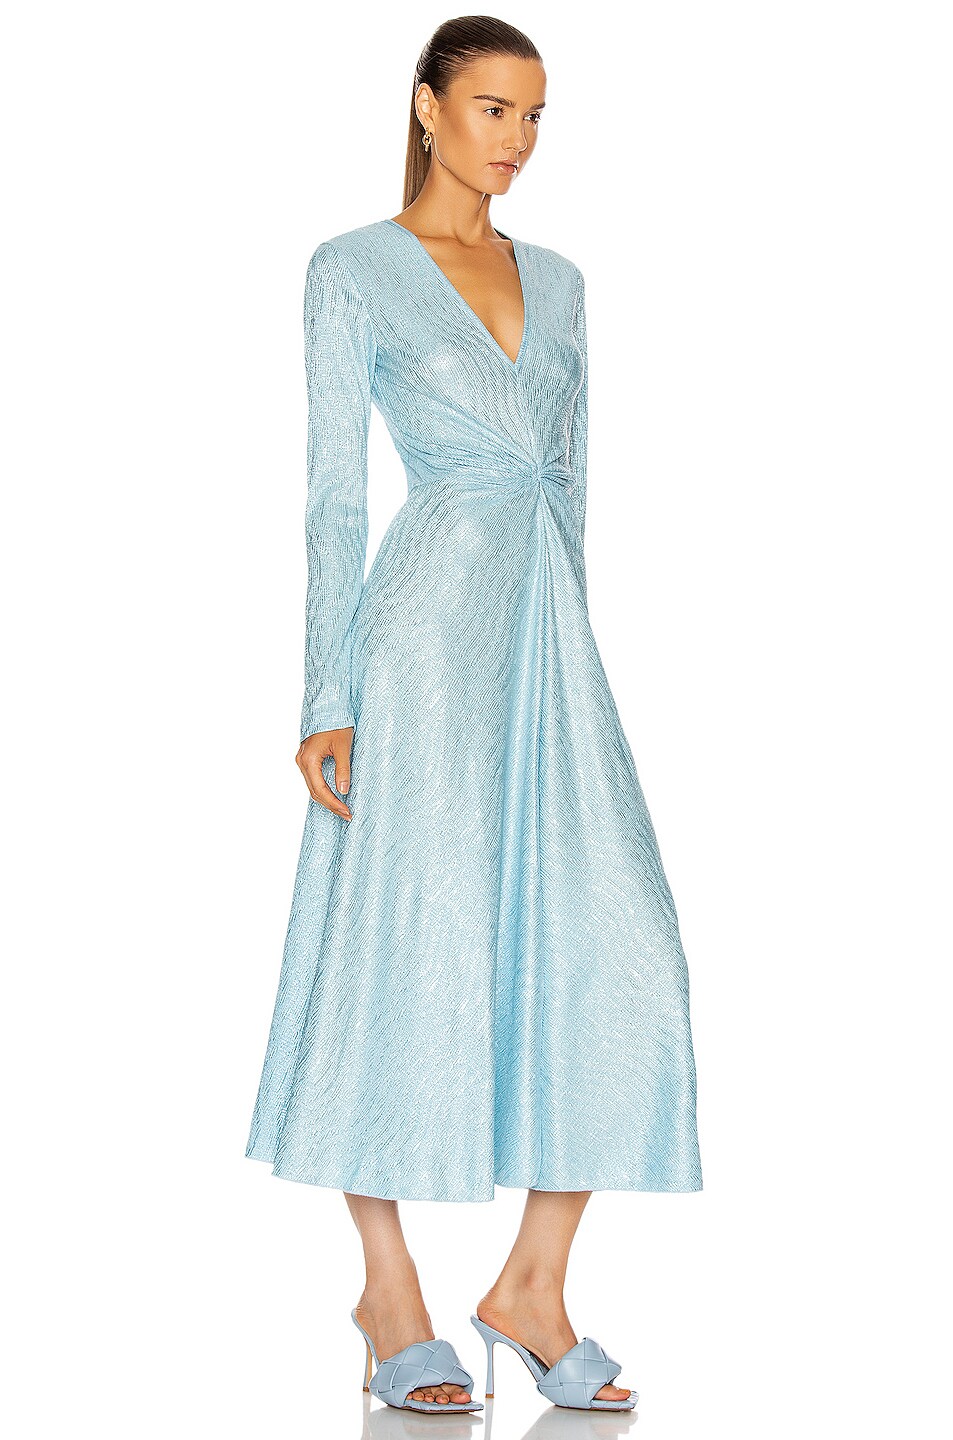 ROTATE Sierra Dress in Bachelor Button Combo | FWRD